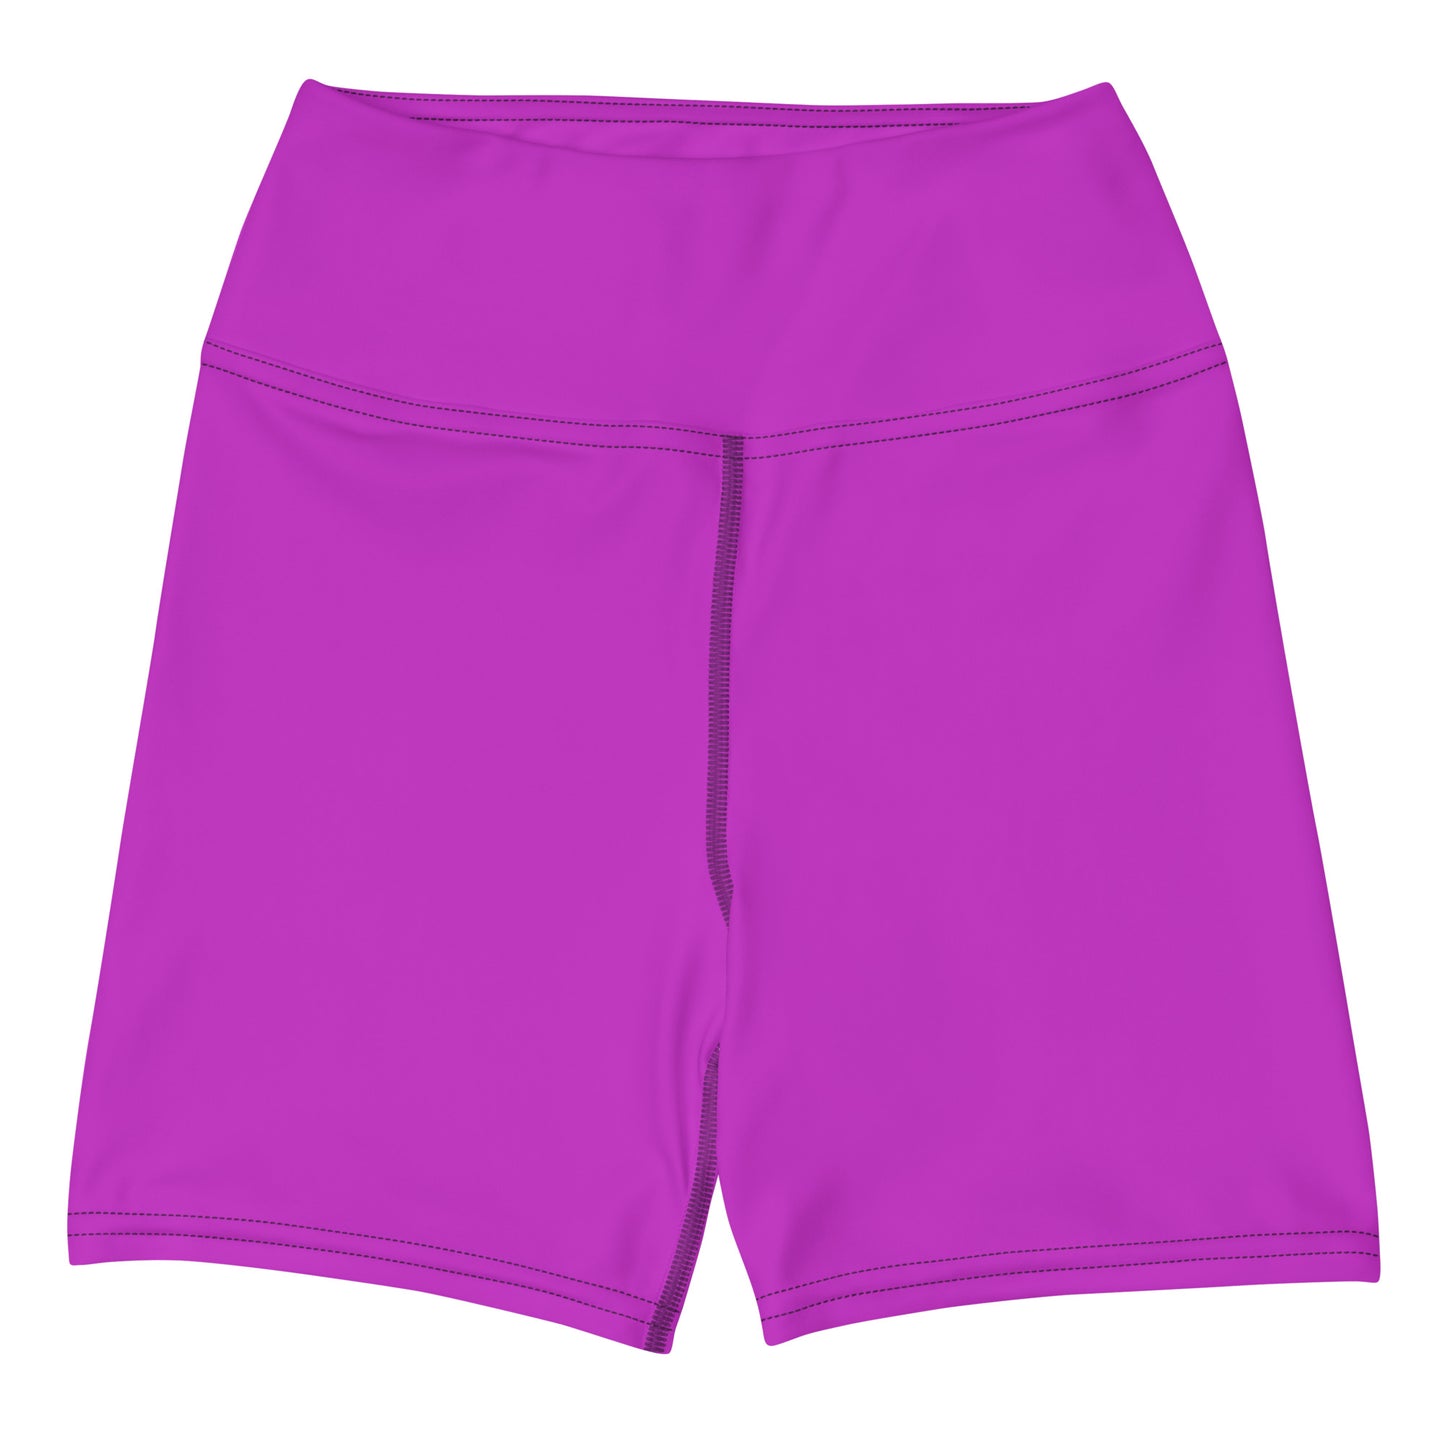 Alpenrose Solid Color High Waist Yoga Shorts / Bike Shorts with Inside Pocket